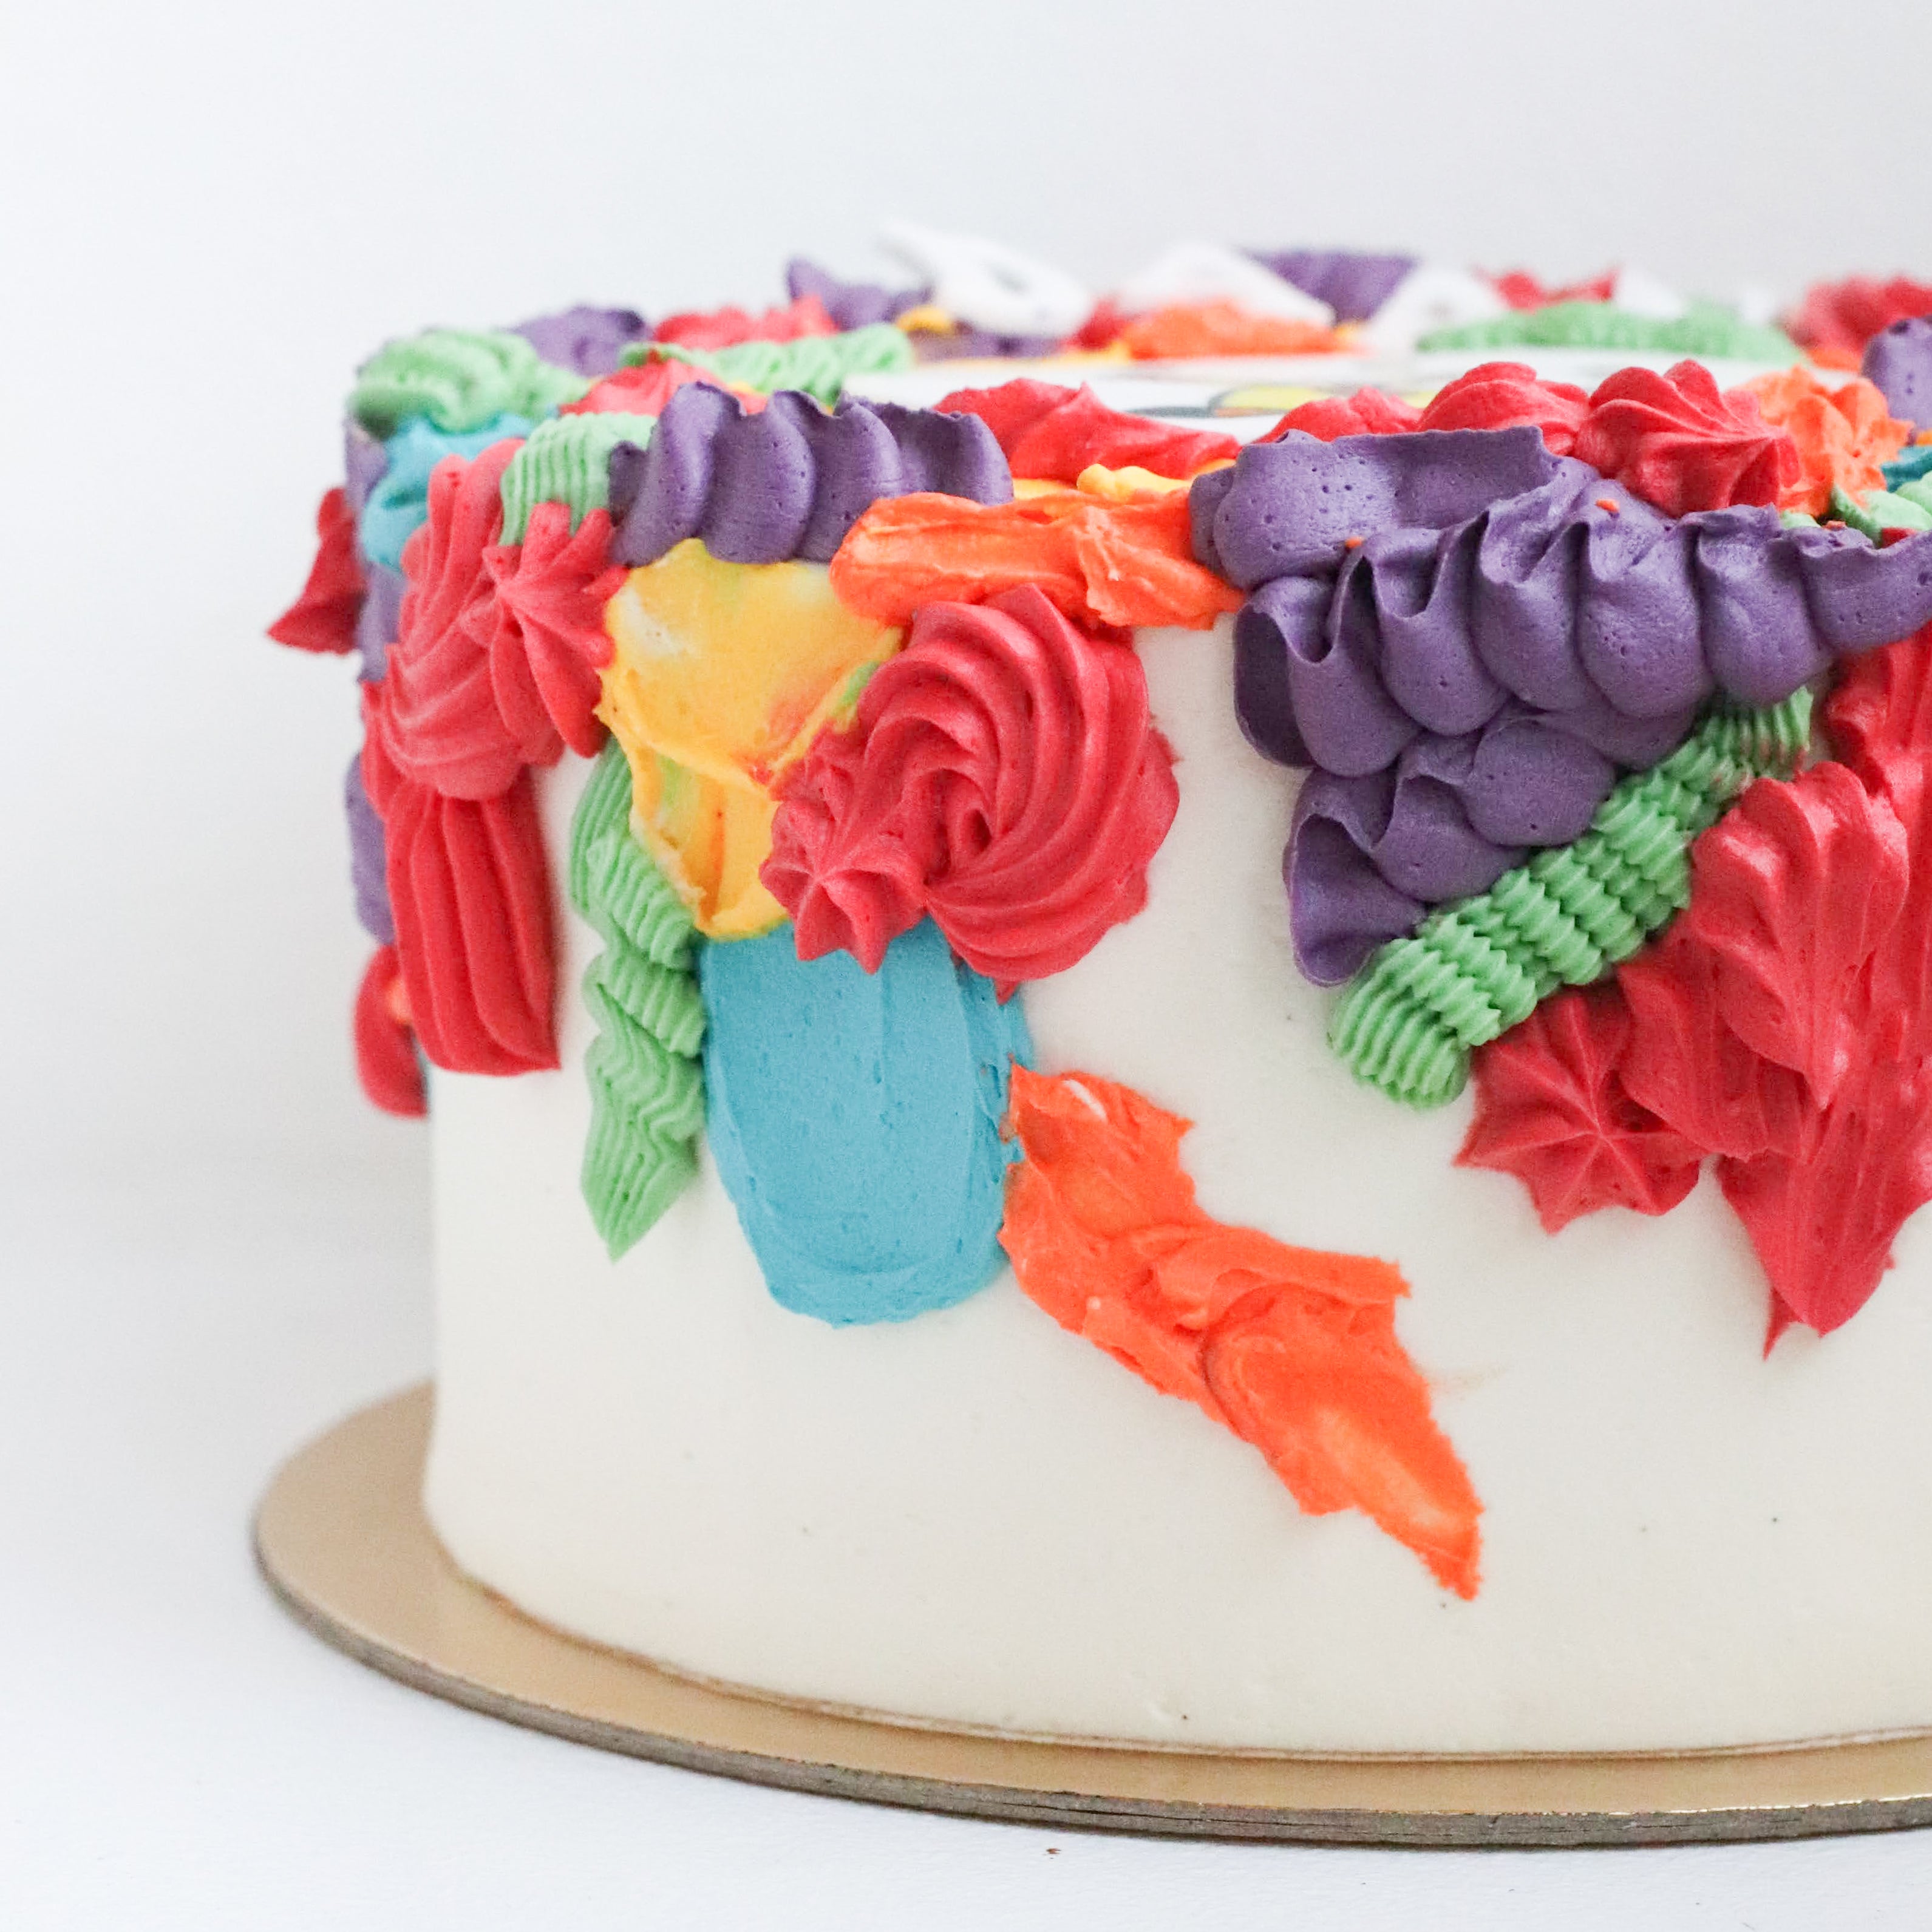 Cakes, Wedding cakes, birthday cakes, corporate cakes - Pretty Cake Cake  Design Belgium, Brussels